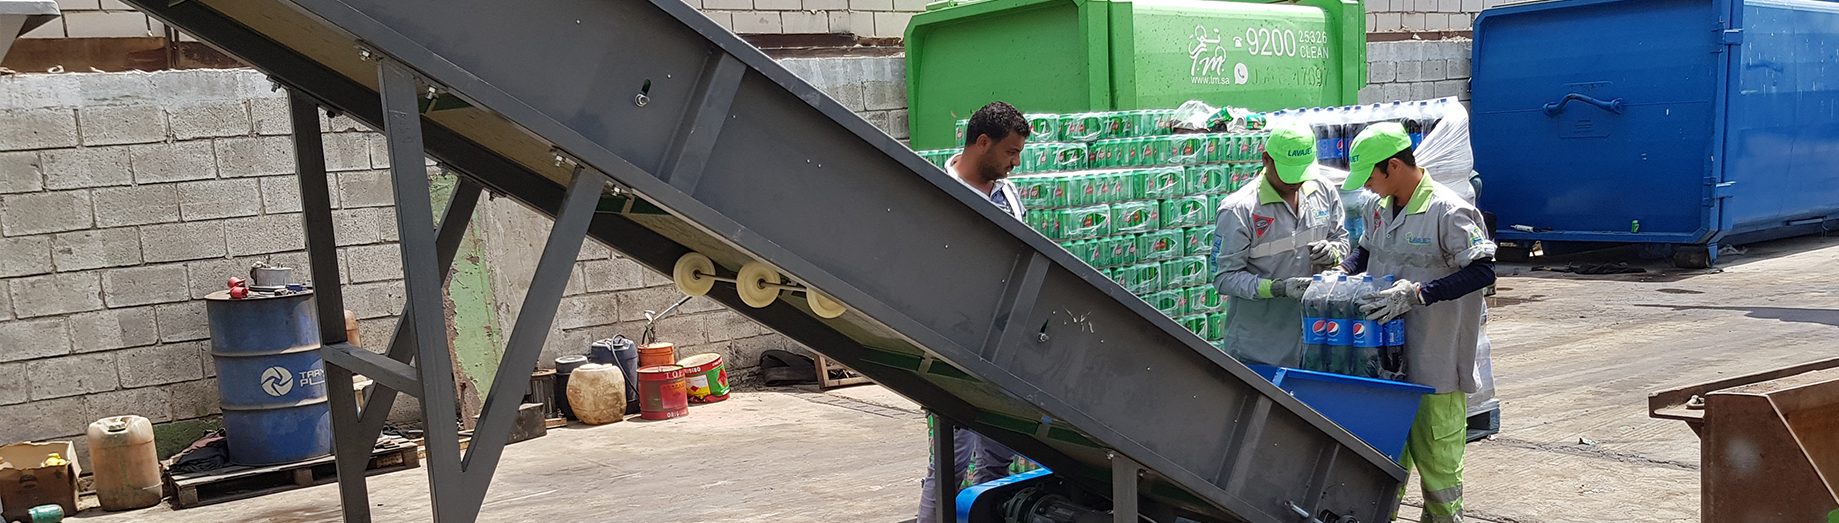 Waste Management Services to Pepsi's Mega Plant in Jeddah